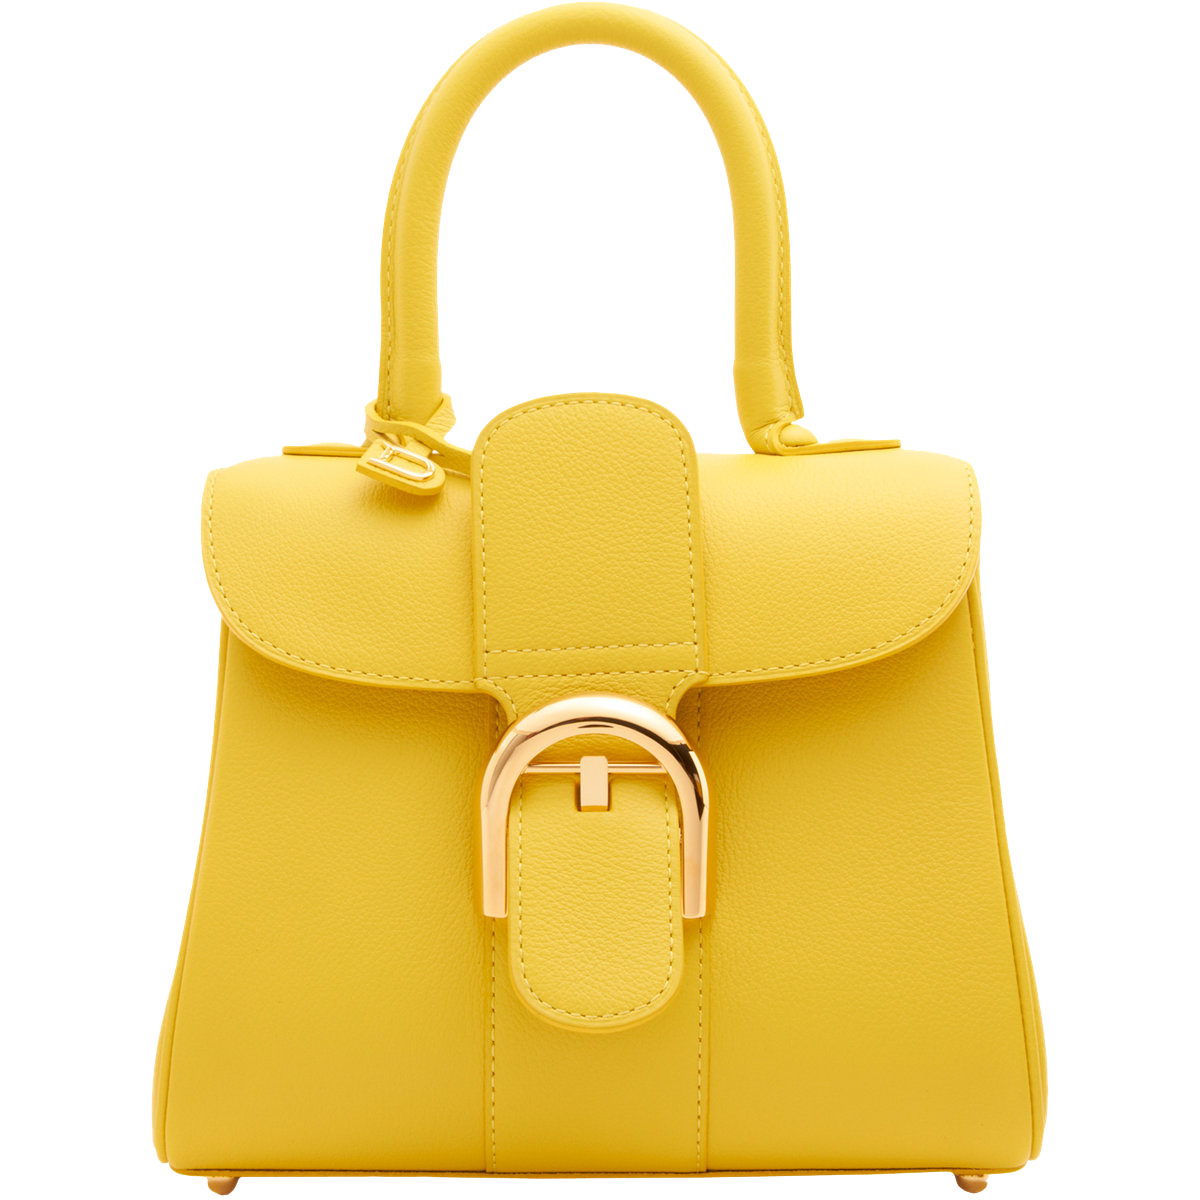 Ladies Handbag PNG Images & PSDs for Download | PixelSquid - S10520229E